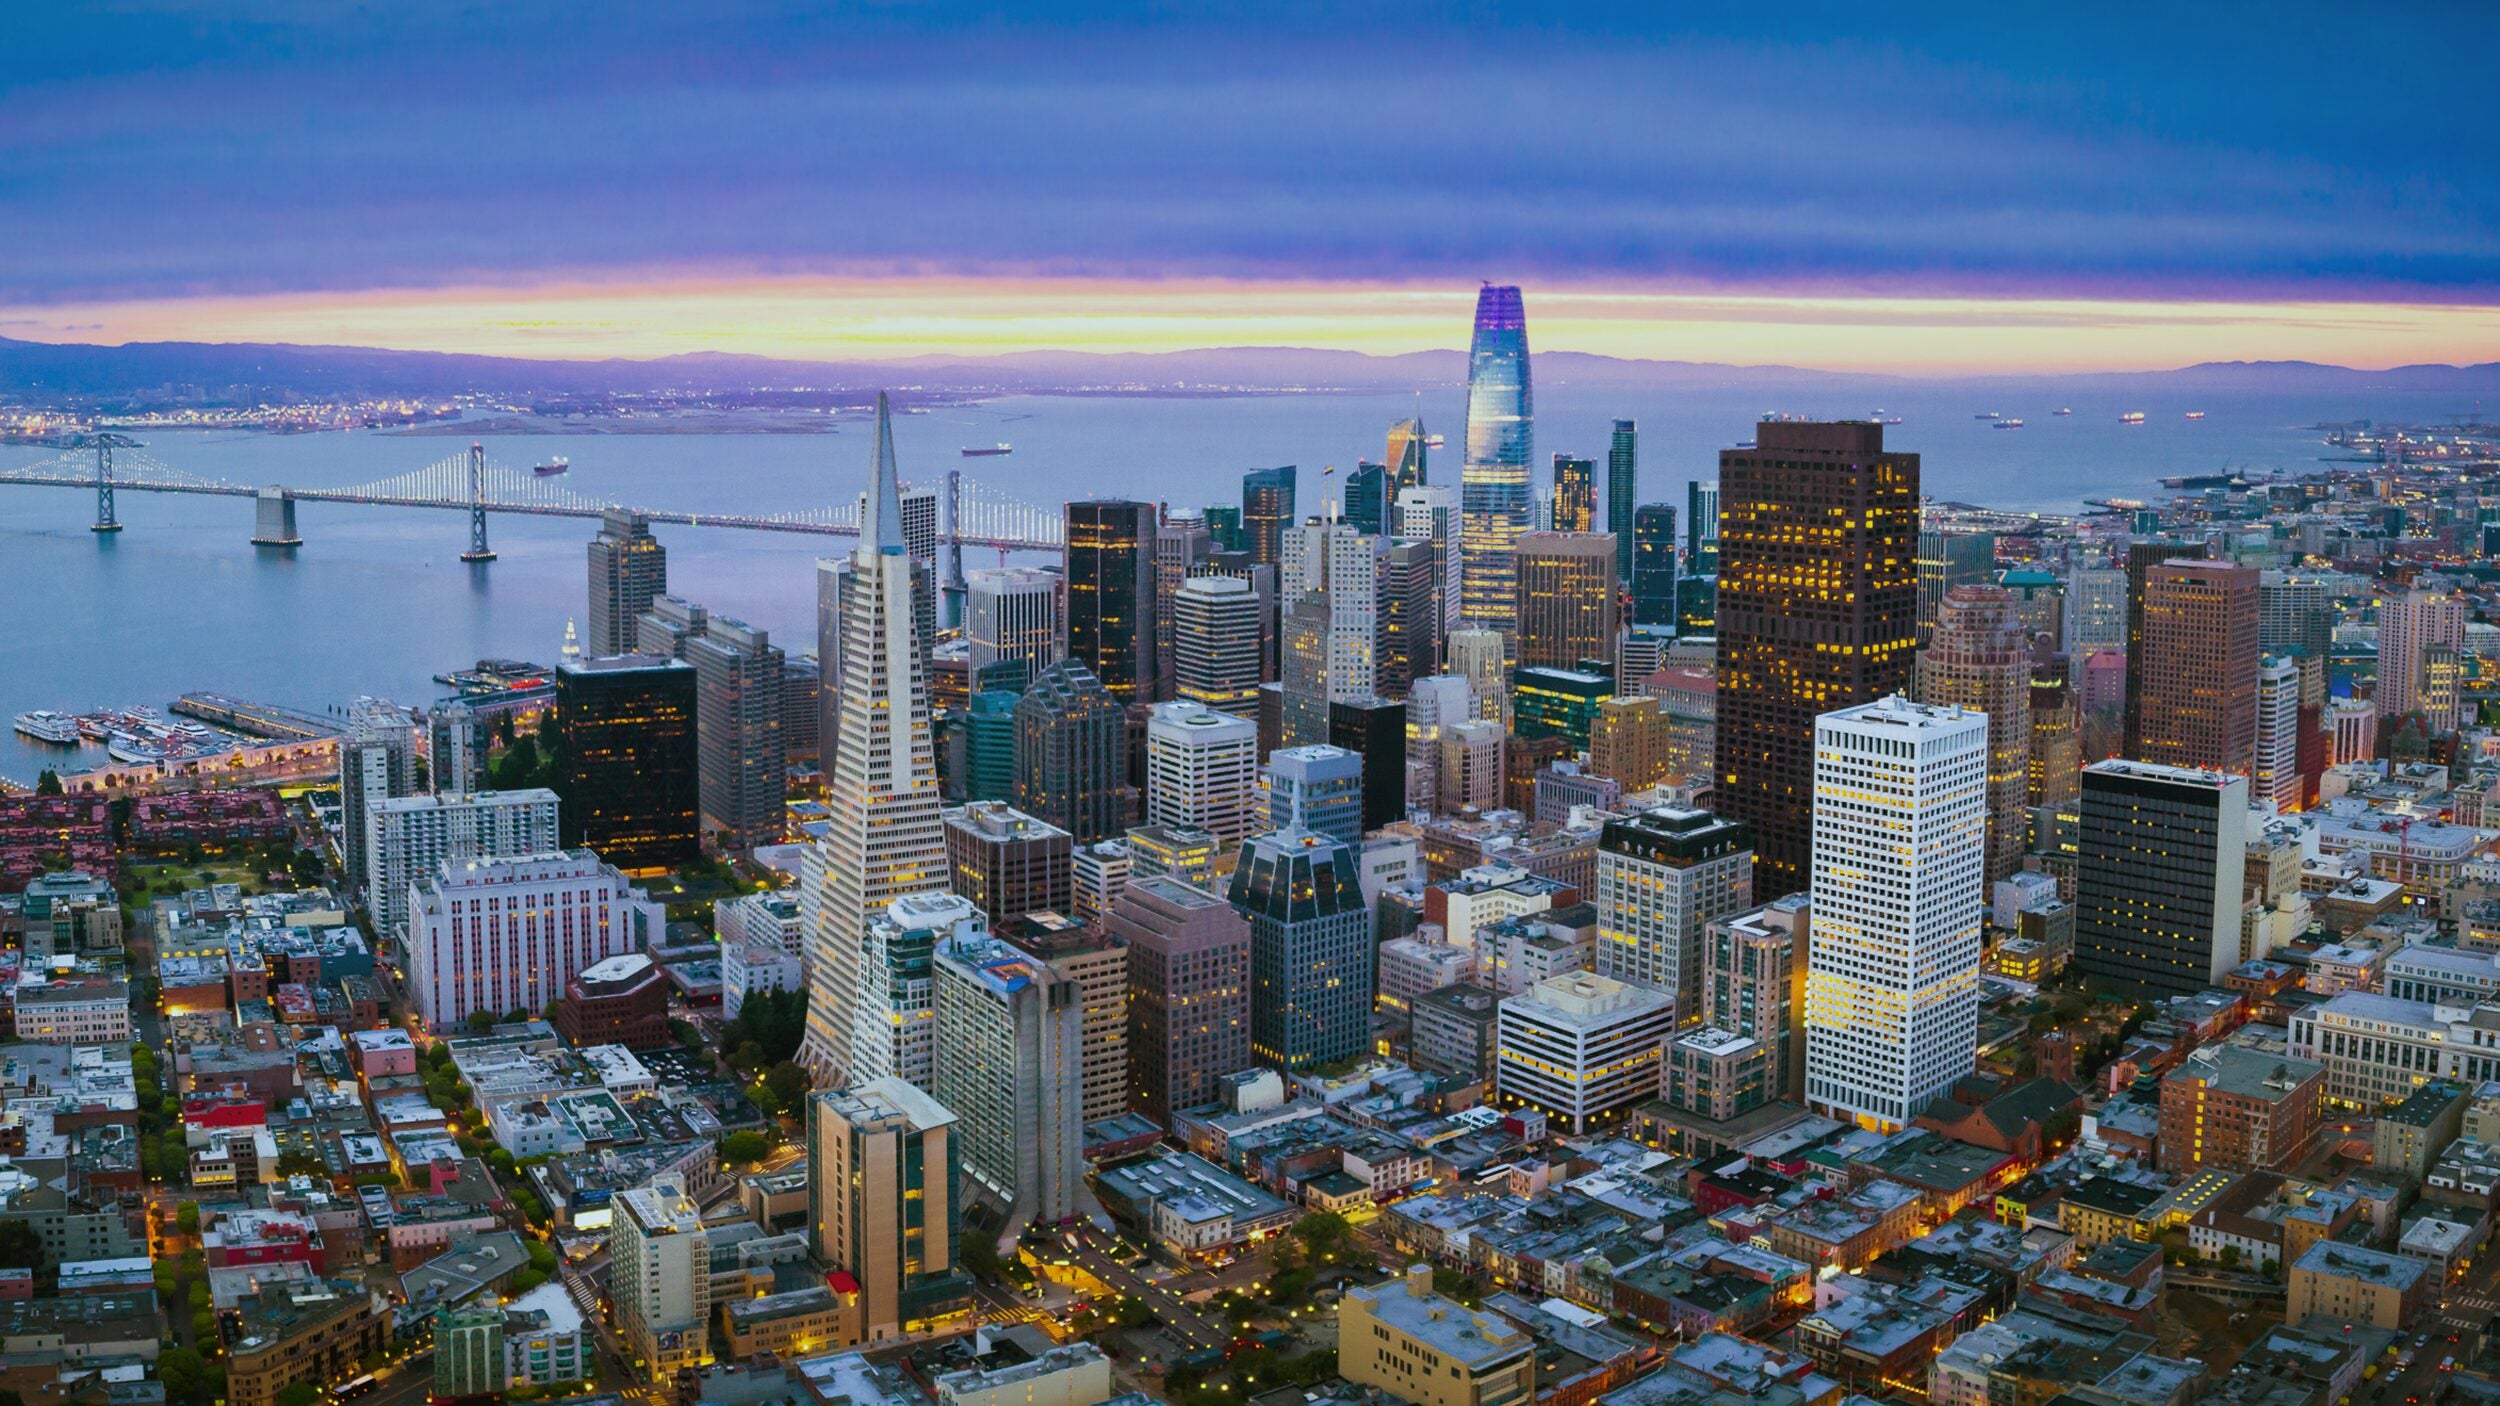 Downtown San Francisco skyline at night.